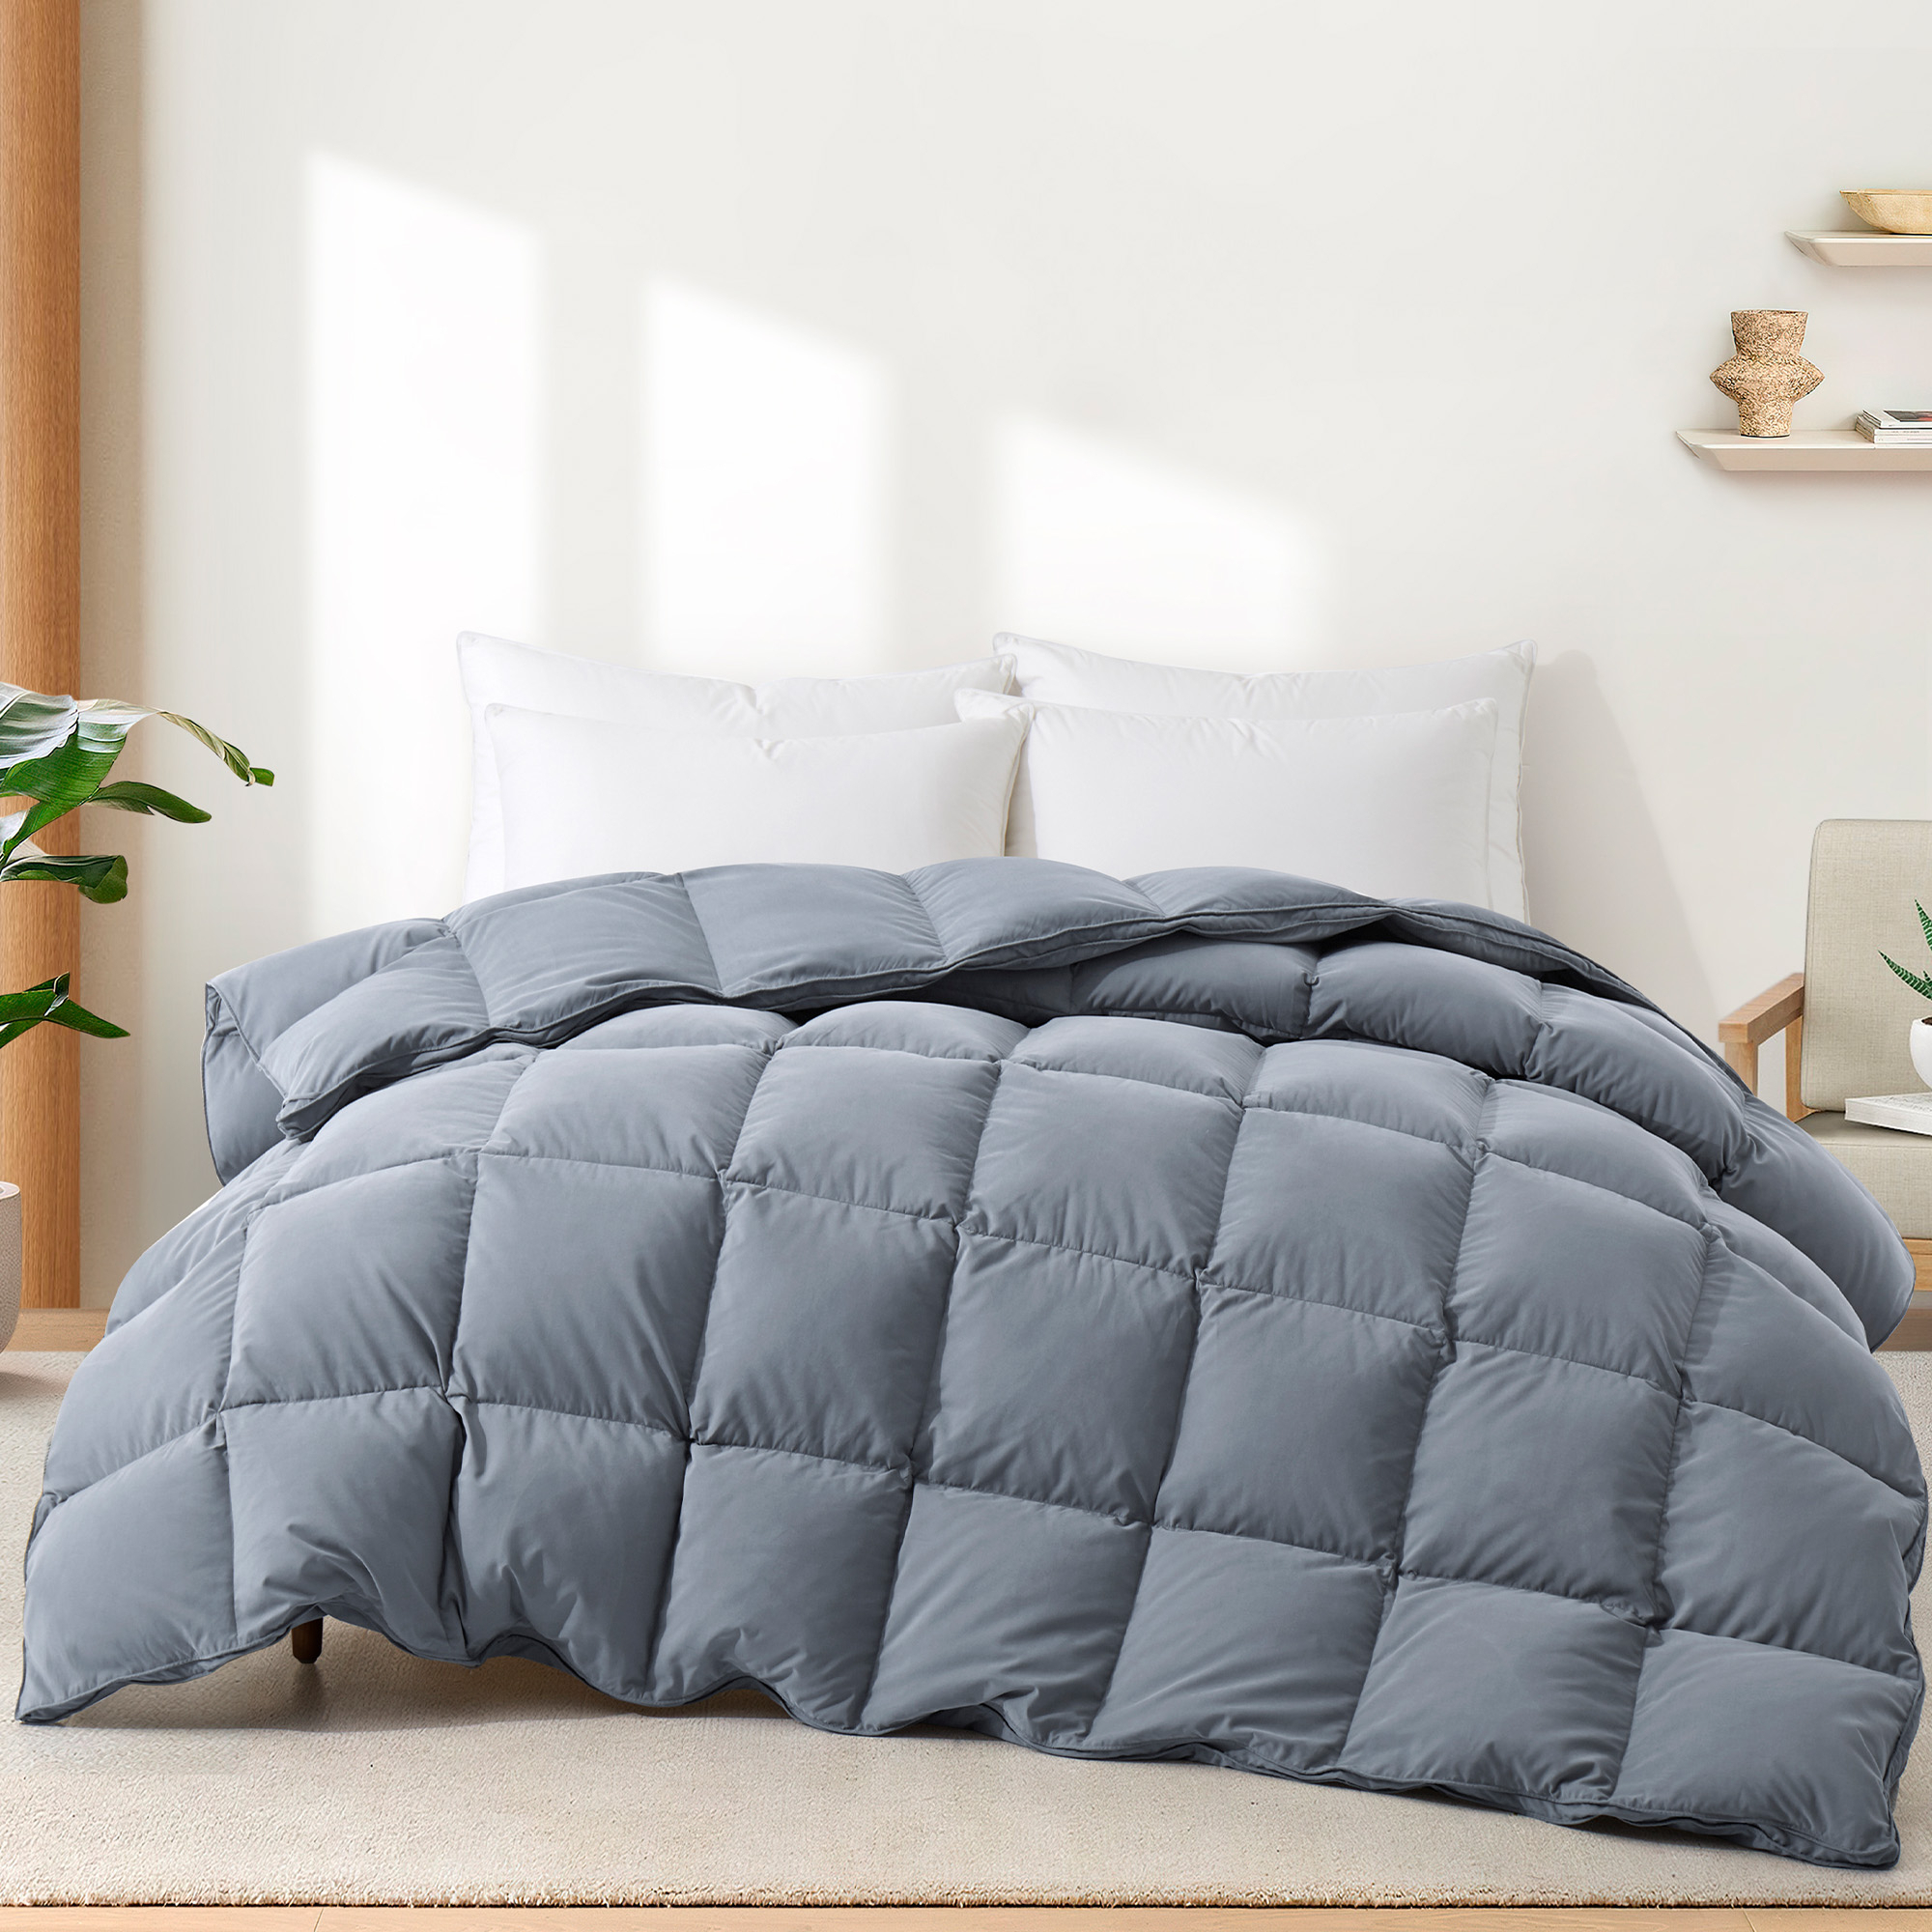 All-Season Goose Down Comforter Duvet Insert, Goose Down & Feather Fiber Fill - Twin